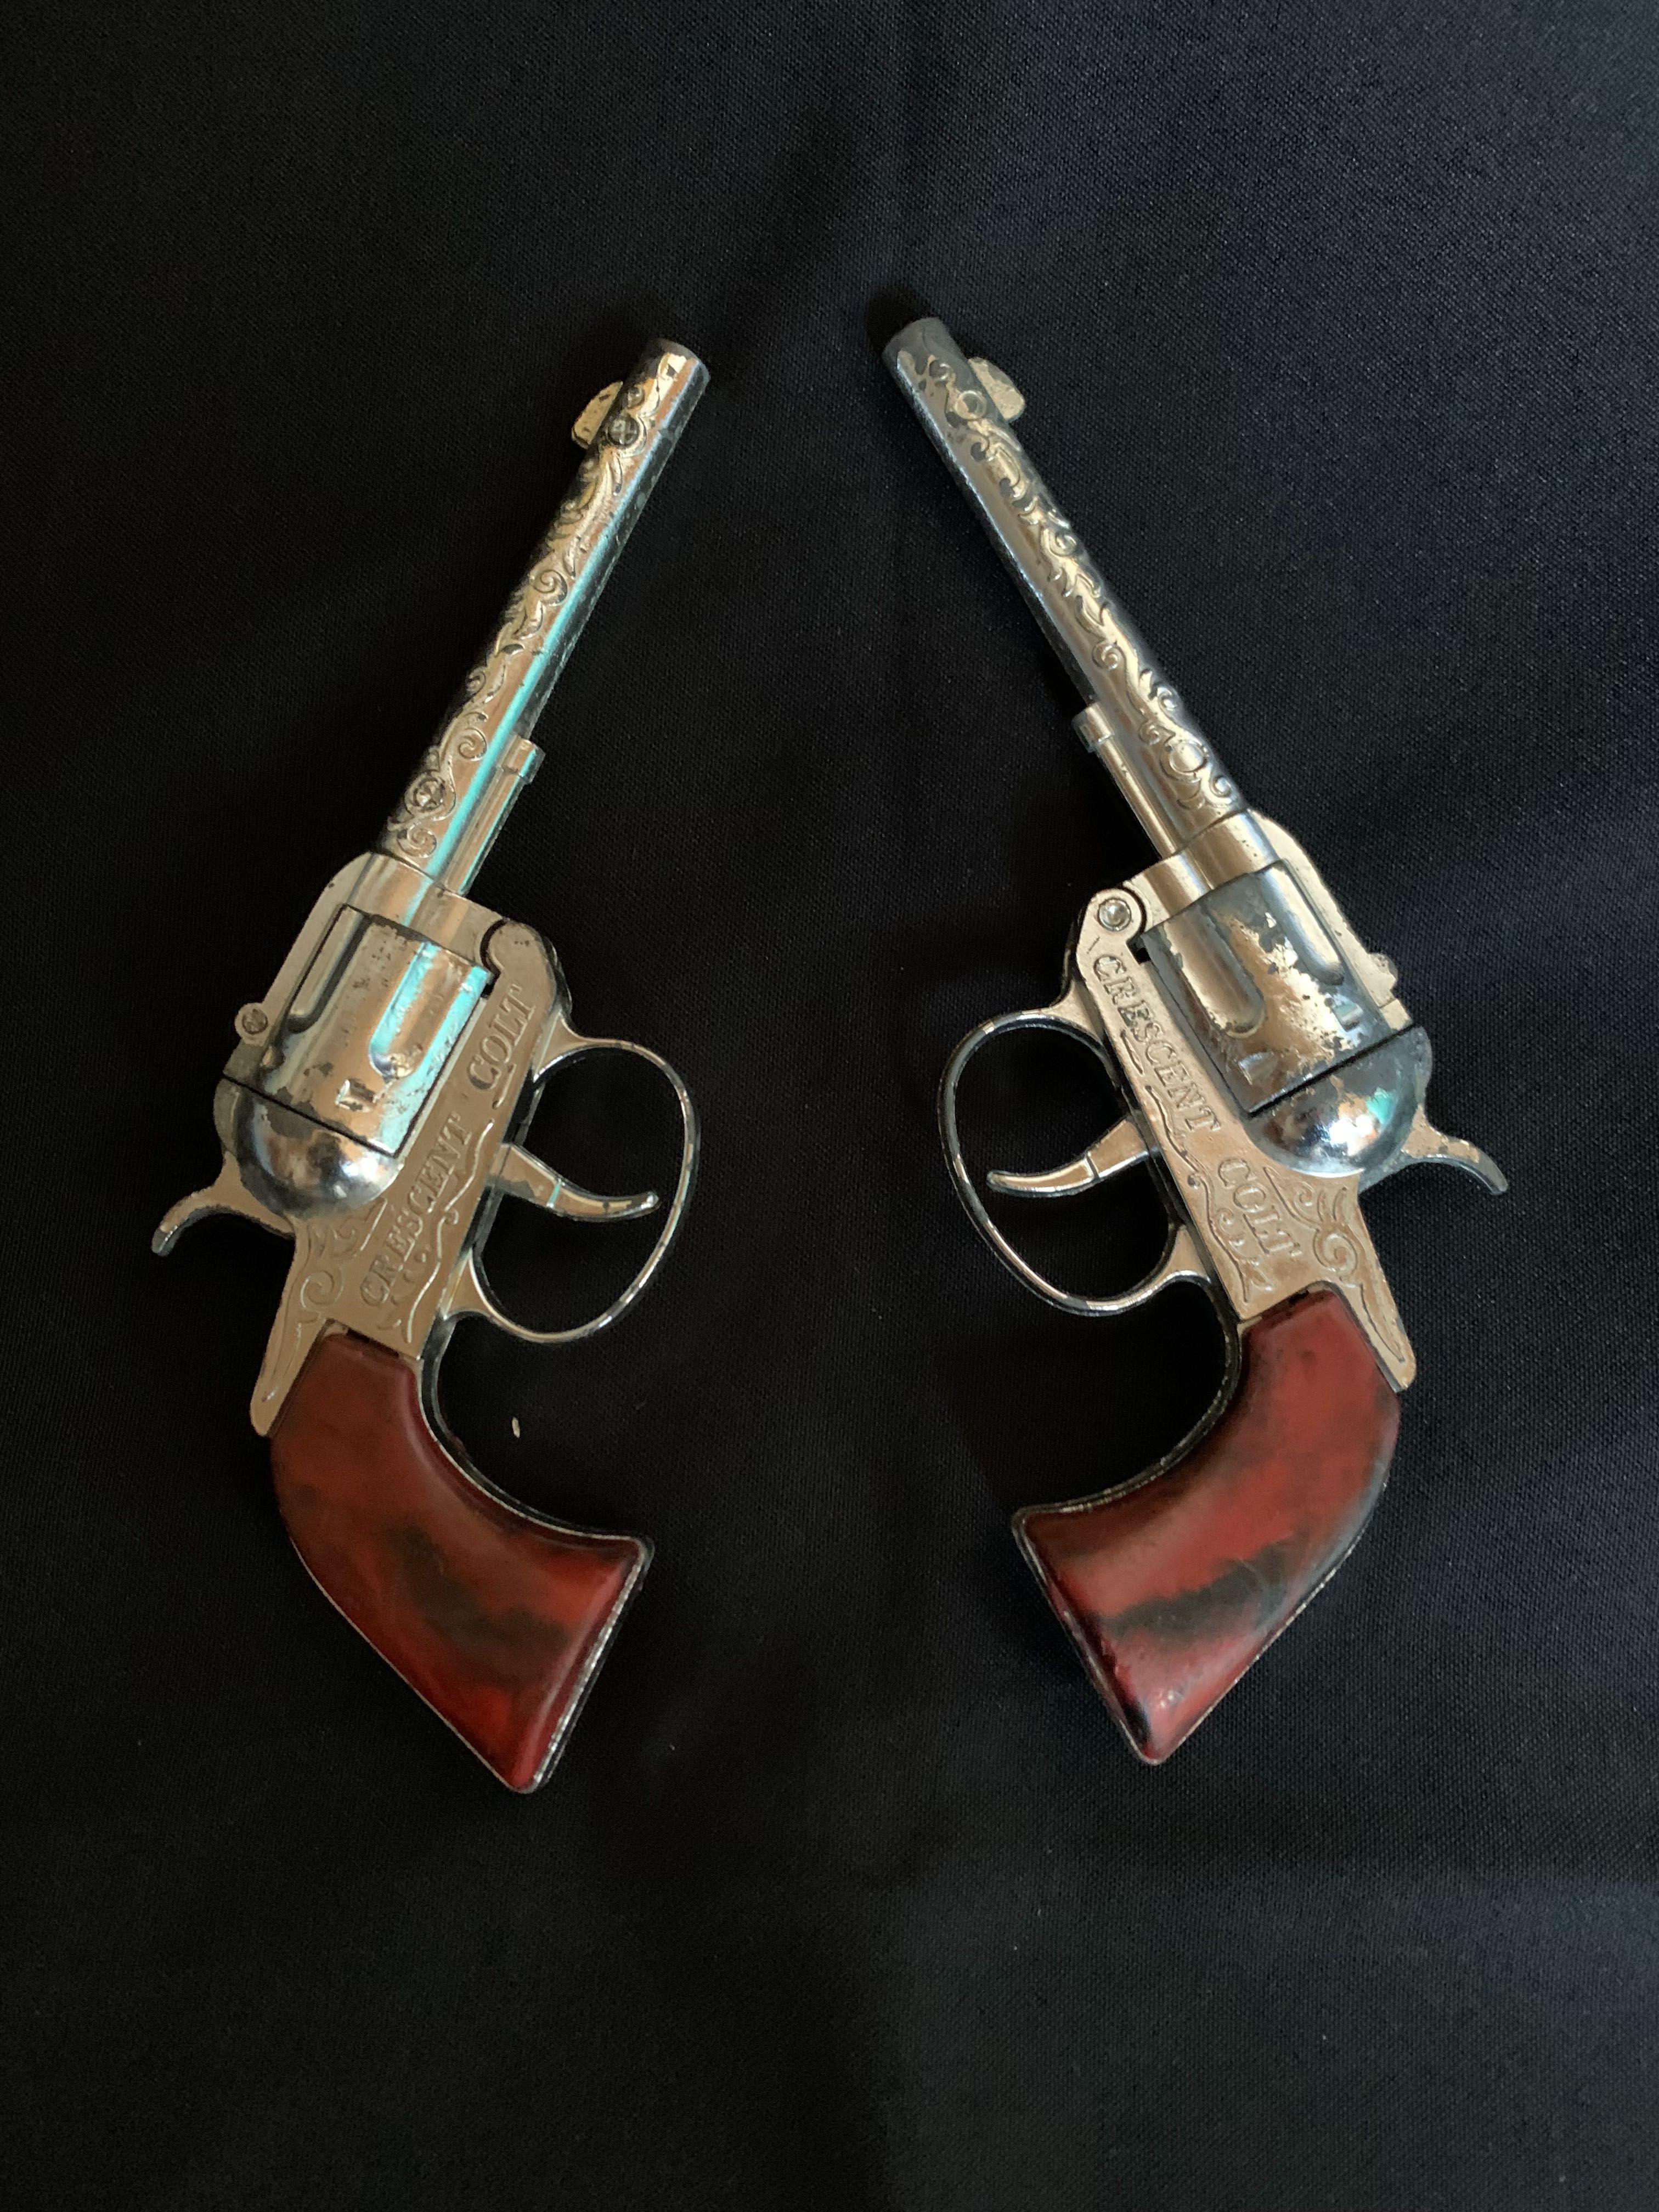 2 Pistolas de Brincar Antigas - Crescent Colt - Inglaterra - Anos 60